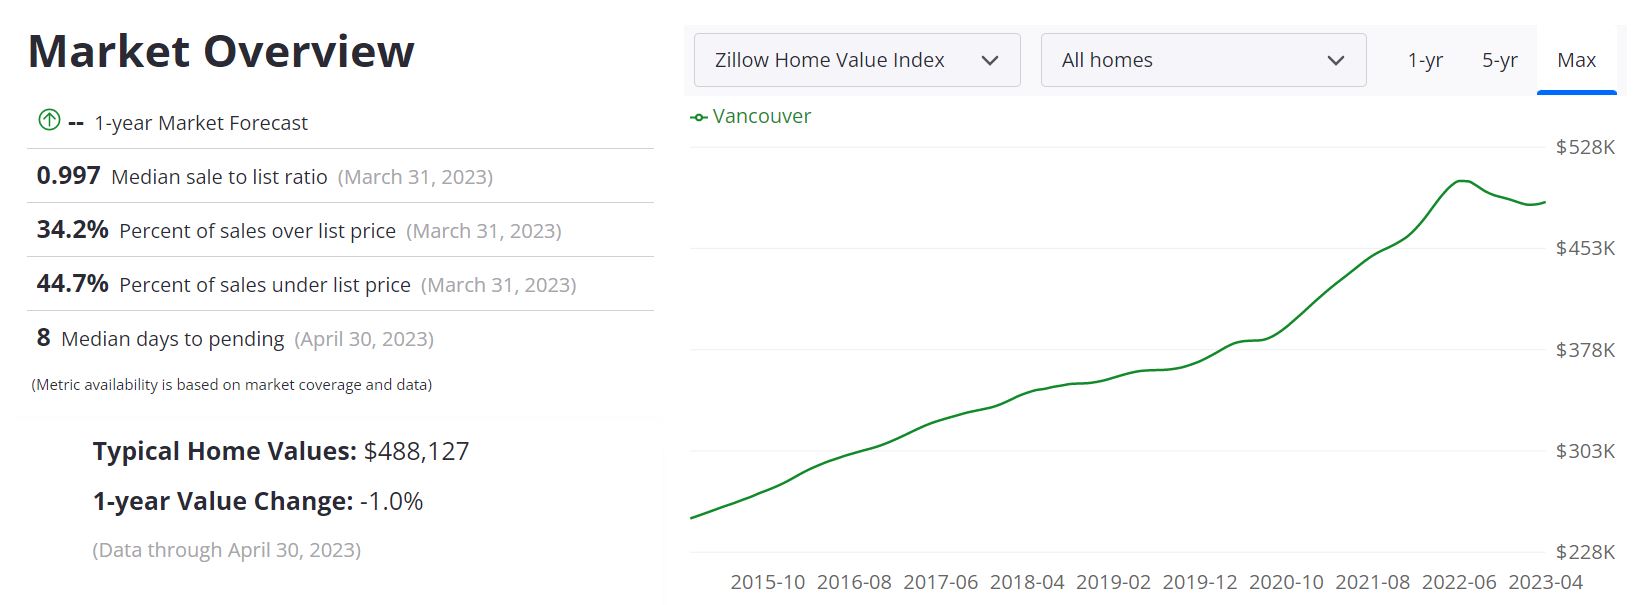 Vancouver Housing Market Forecast 